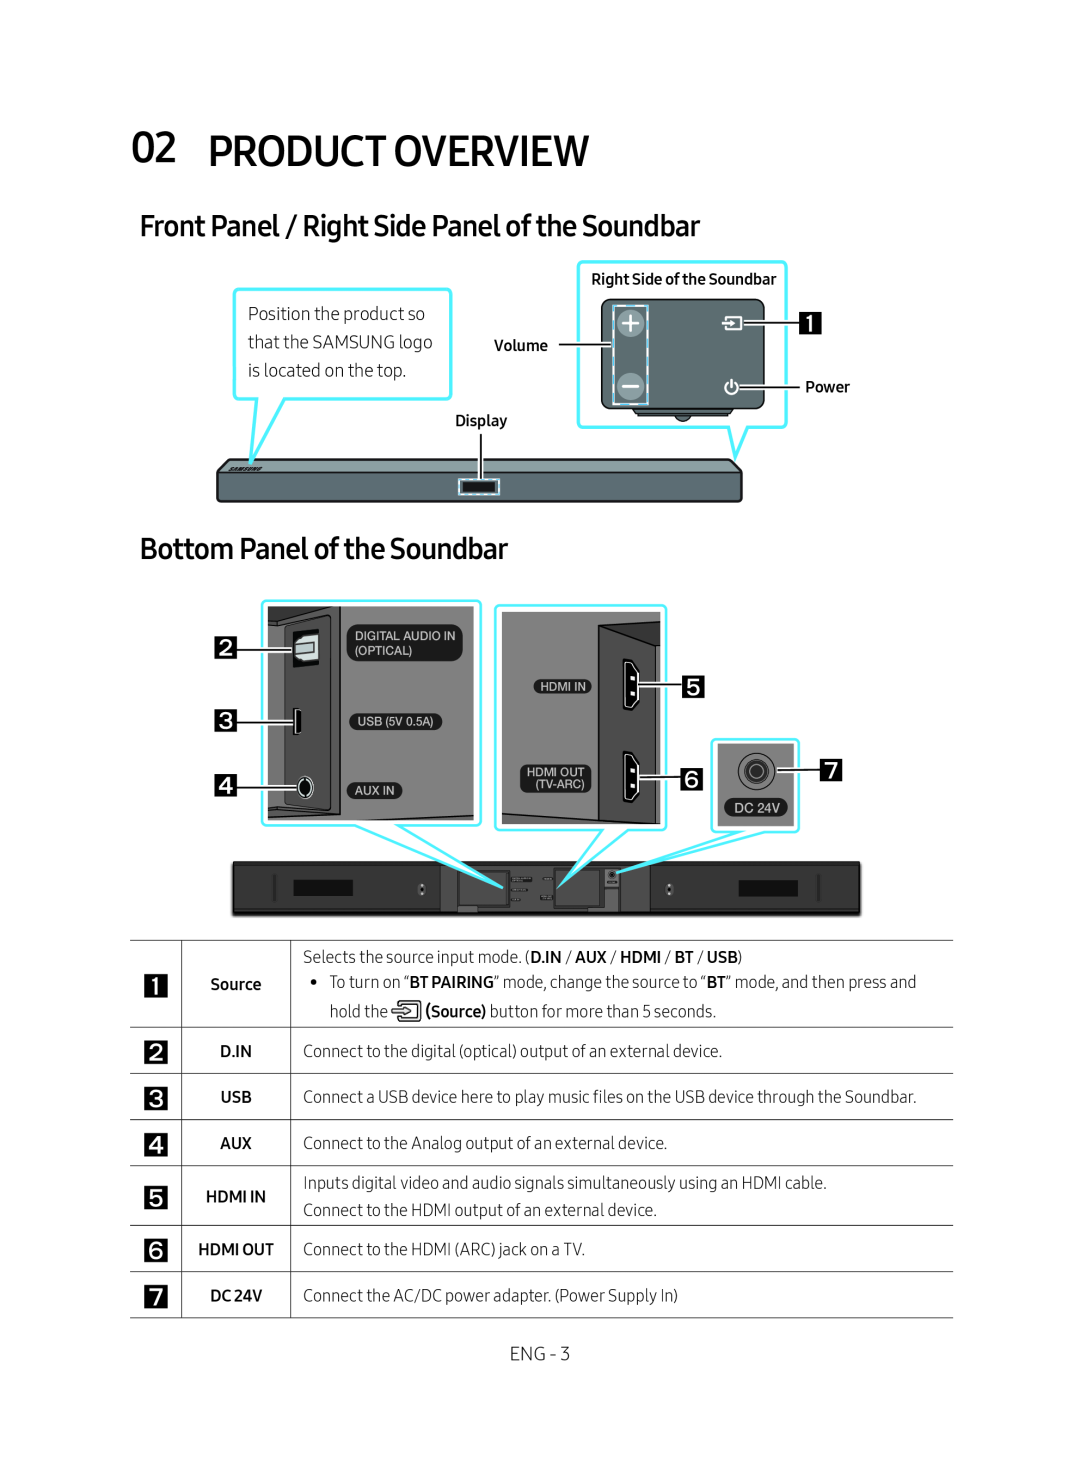 Front Panel / Right Side Panel of the Soundbar Standard HW-MM45C